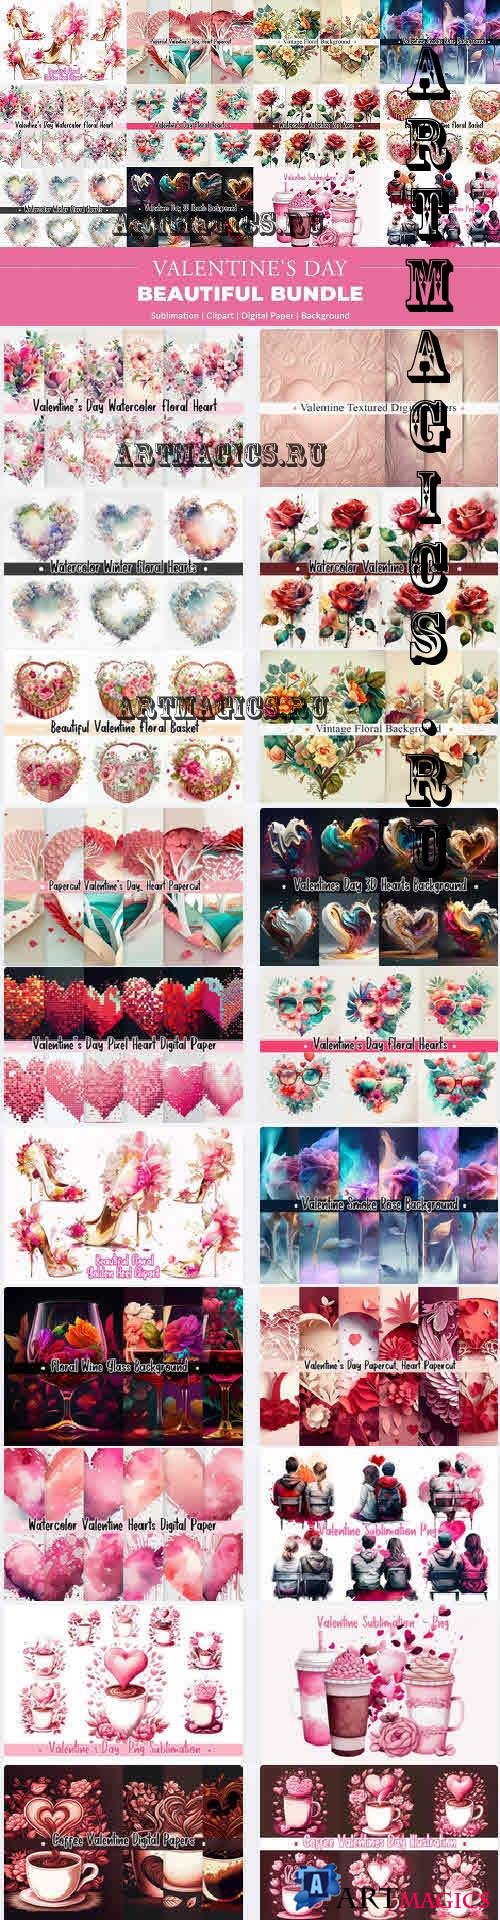 Valentine's Day Beautiful Bundle - 20 Premium Graphics